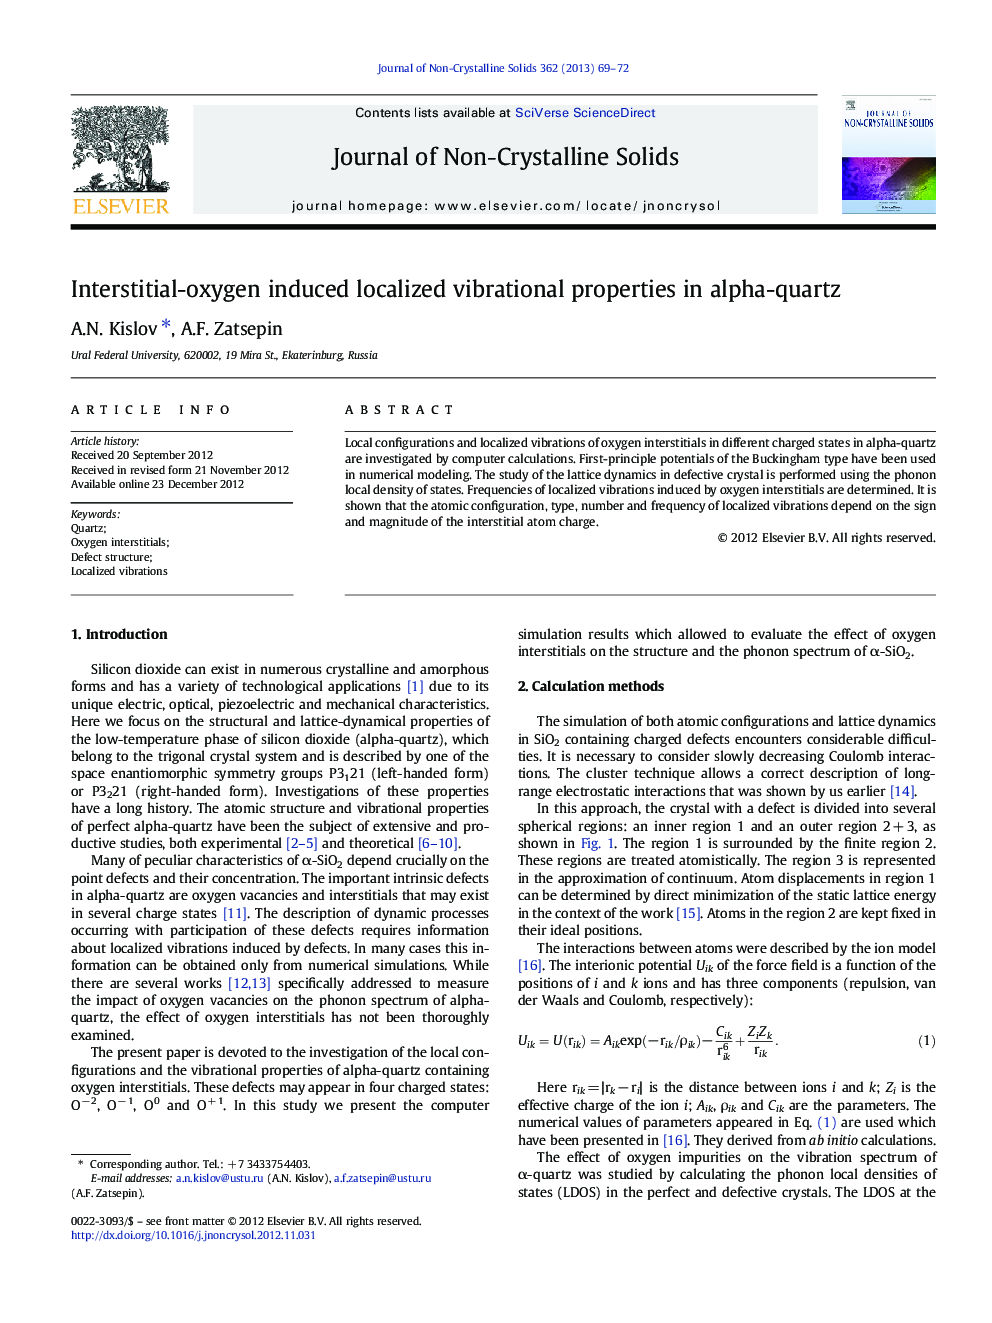 Interstitial-oxygen induced localized vibrational properties in alpha-quartz